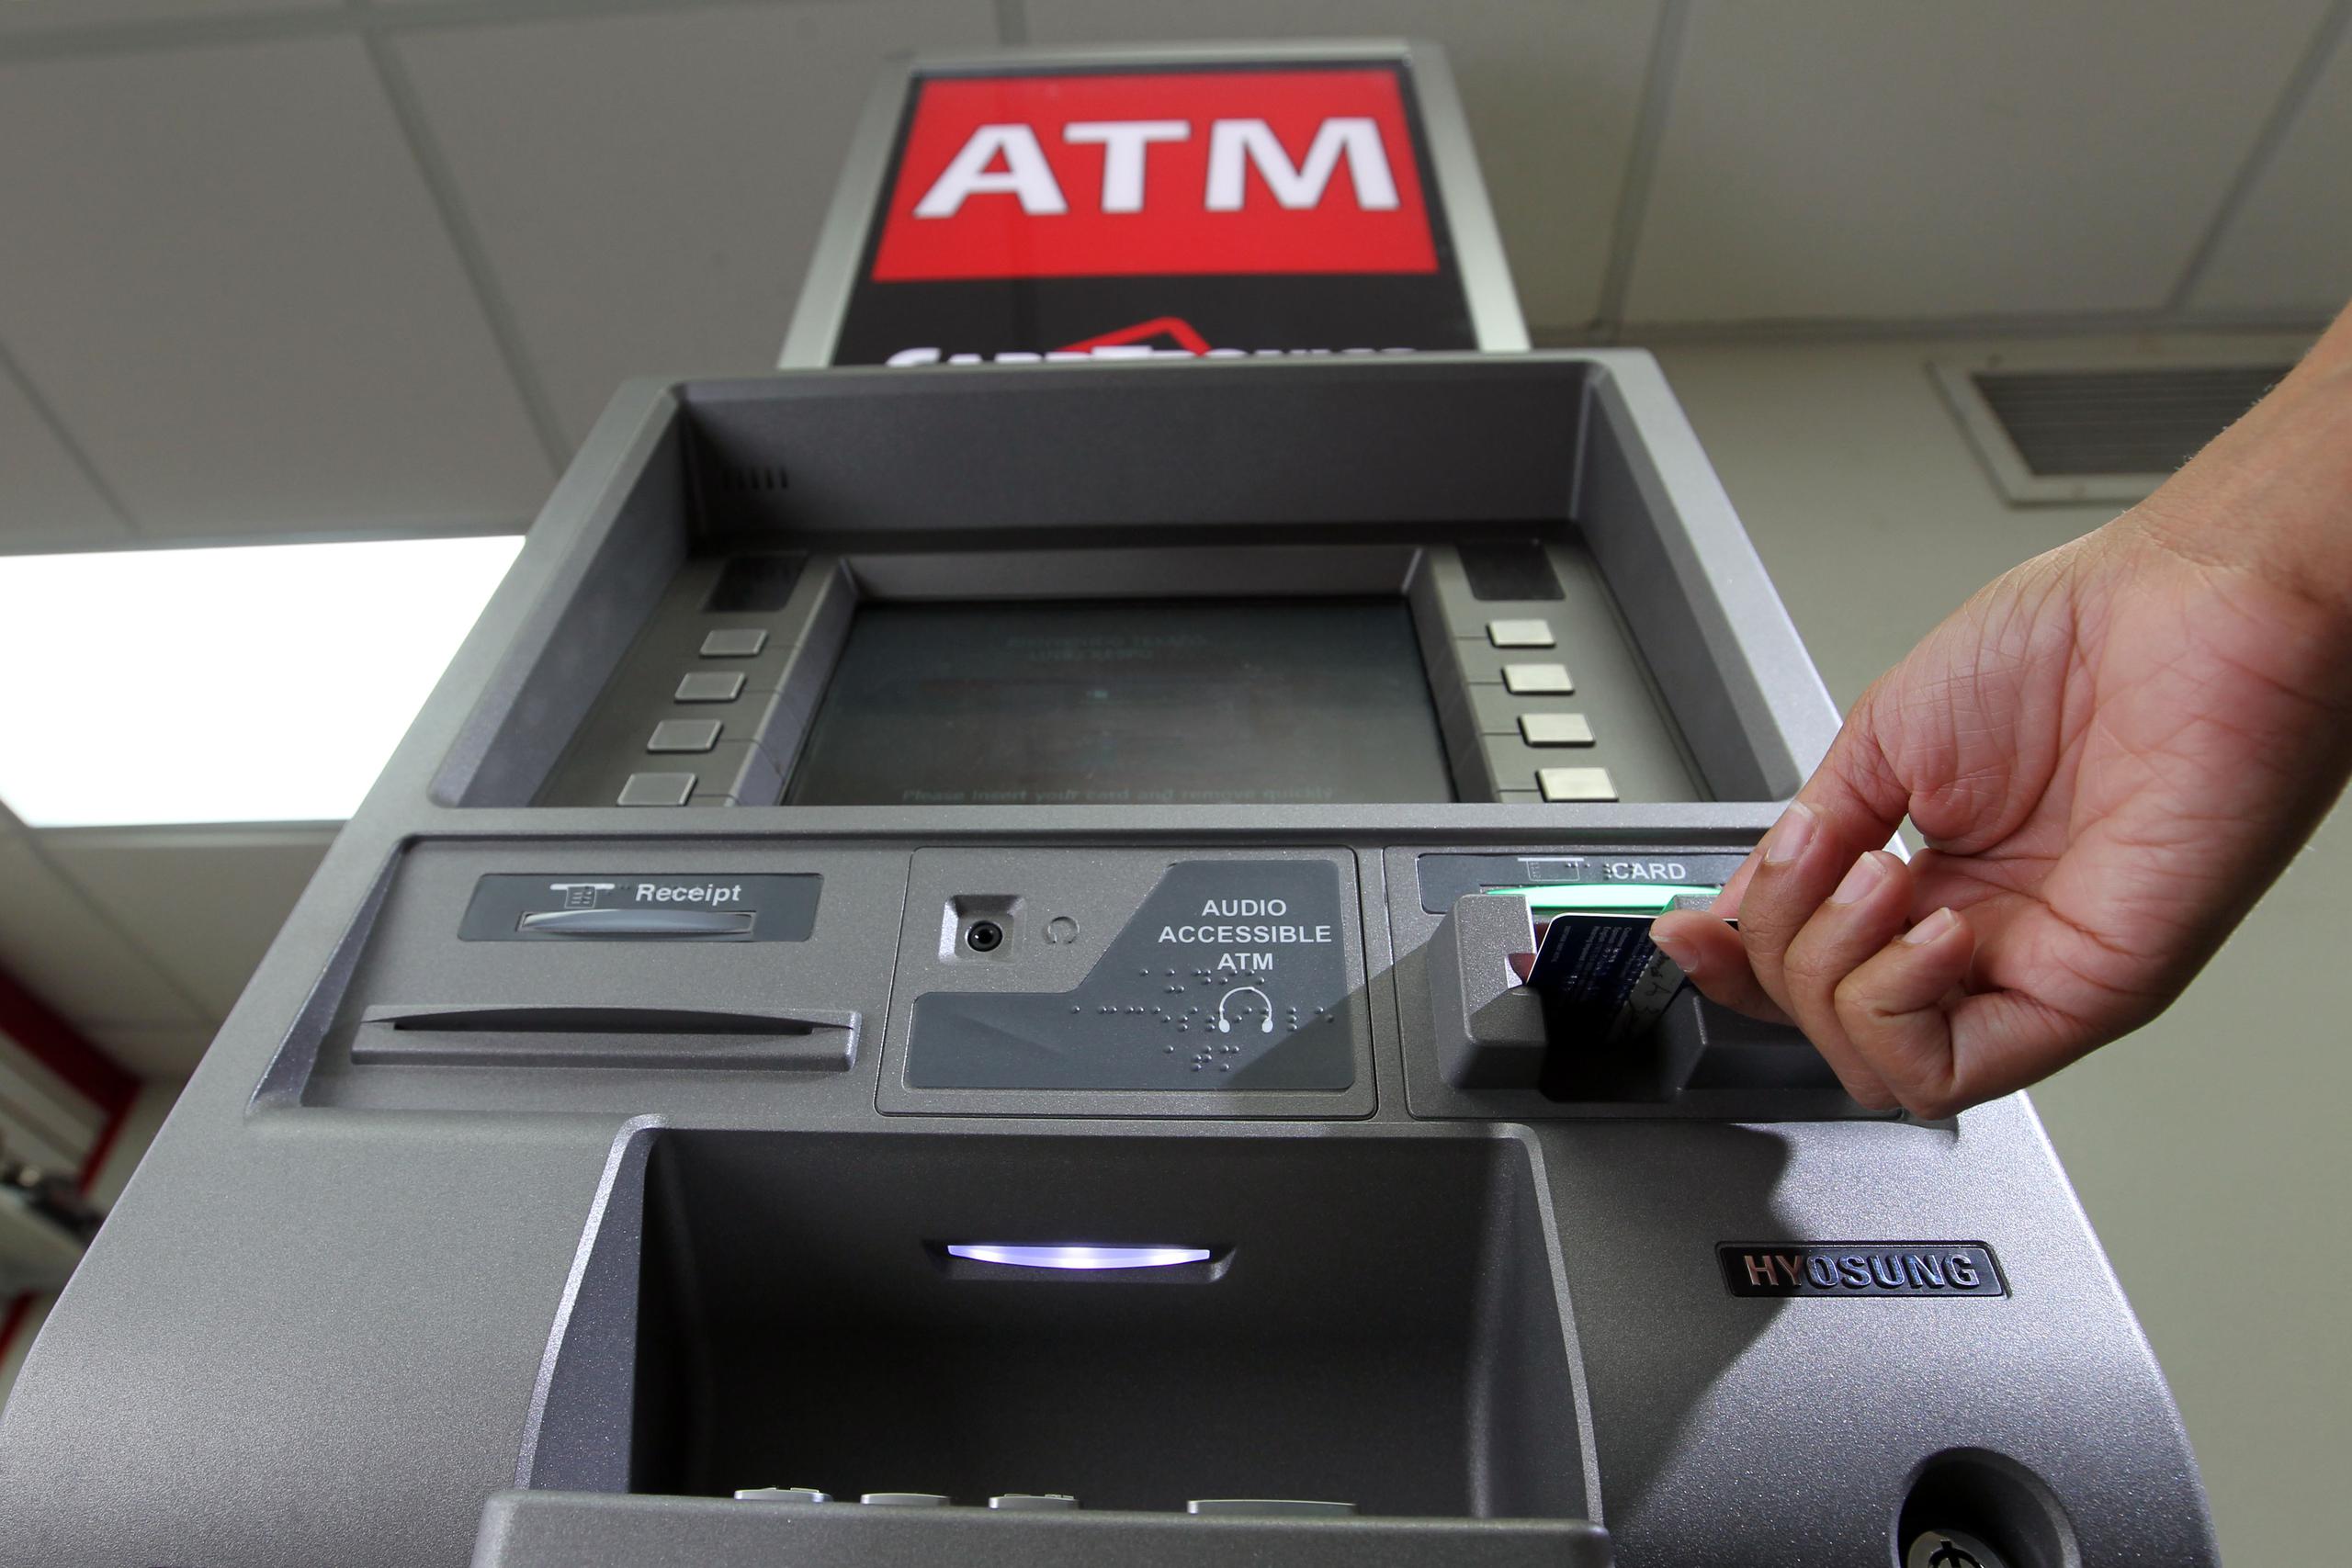 Cajero automatico (ATM). (Archivo / Ramon " Tonito " Zayas / GFR Media)